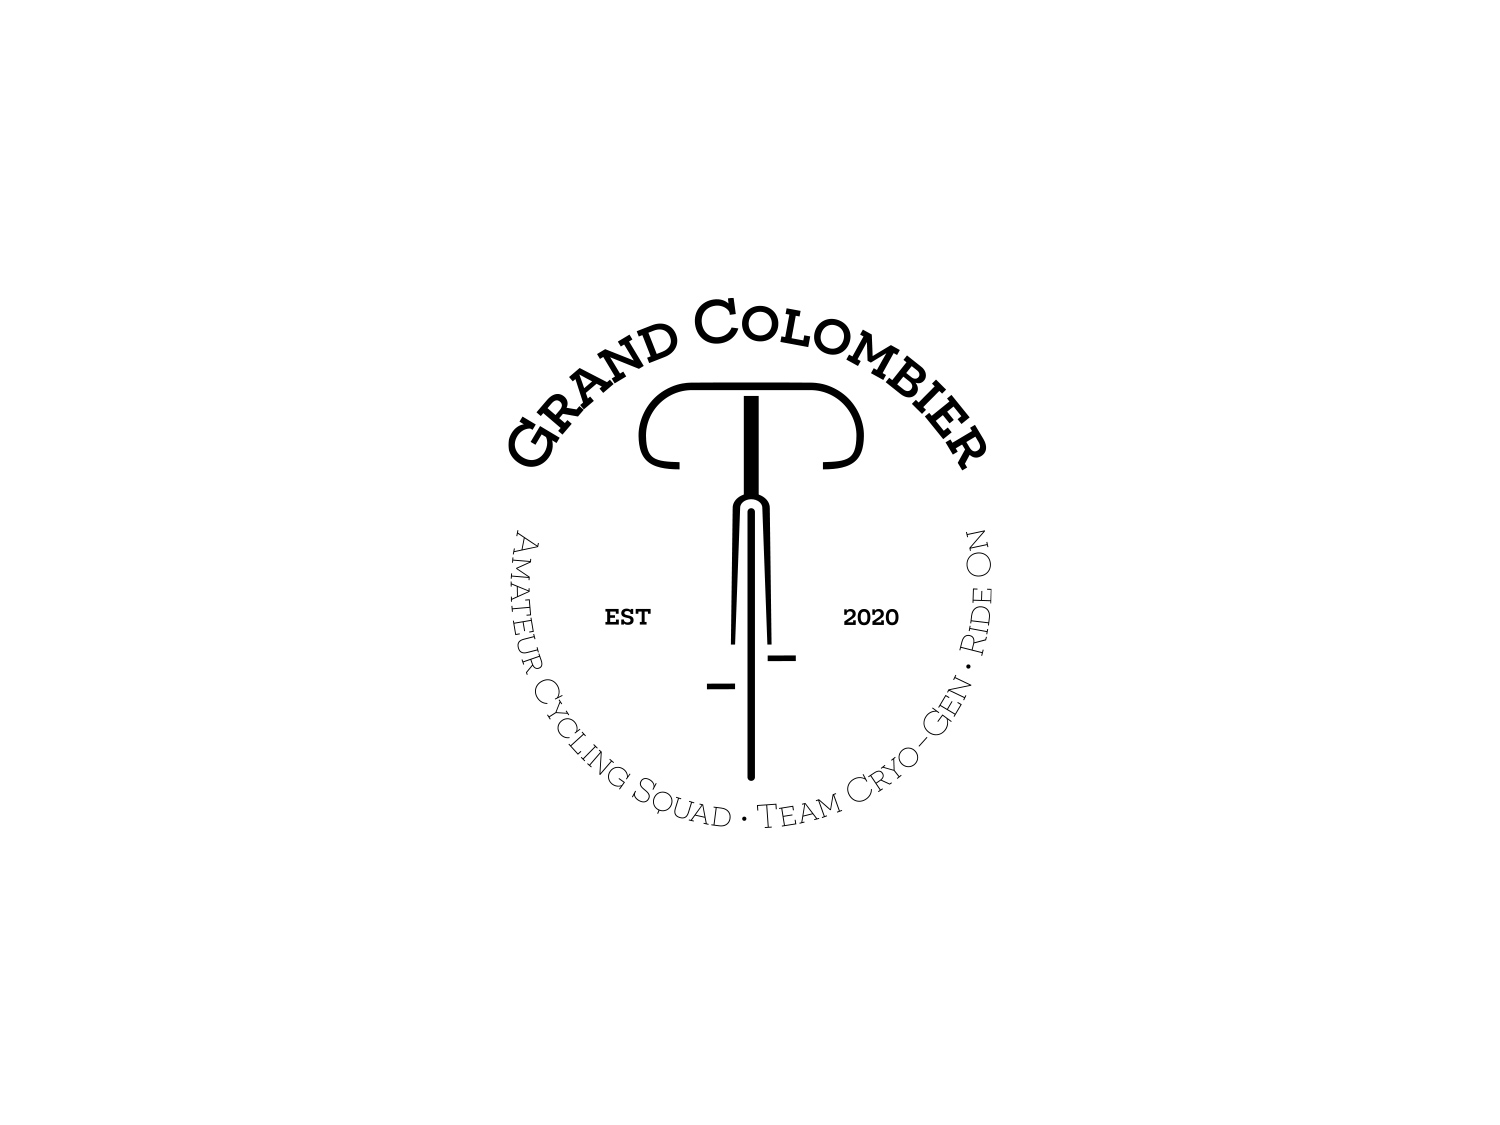 Zwift eCycling Team Logo: Cryo-Gen Grand Colombier